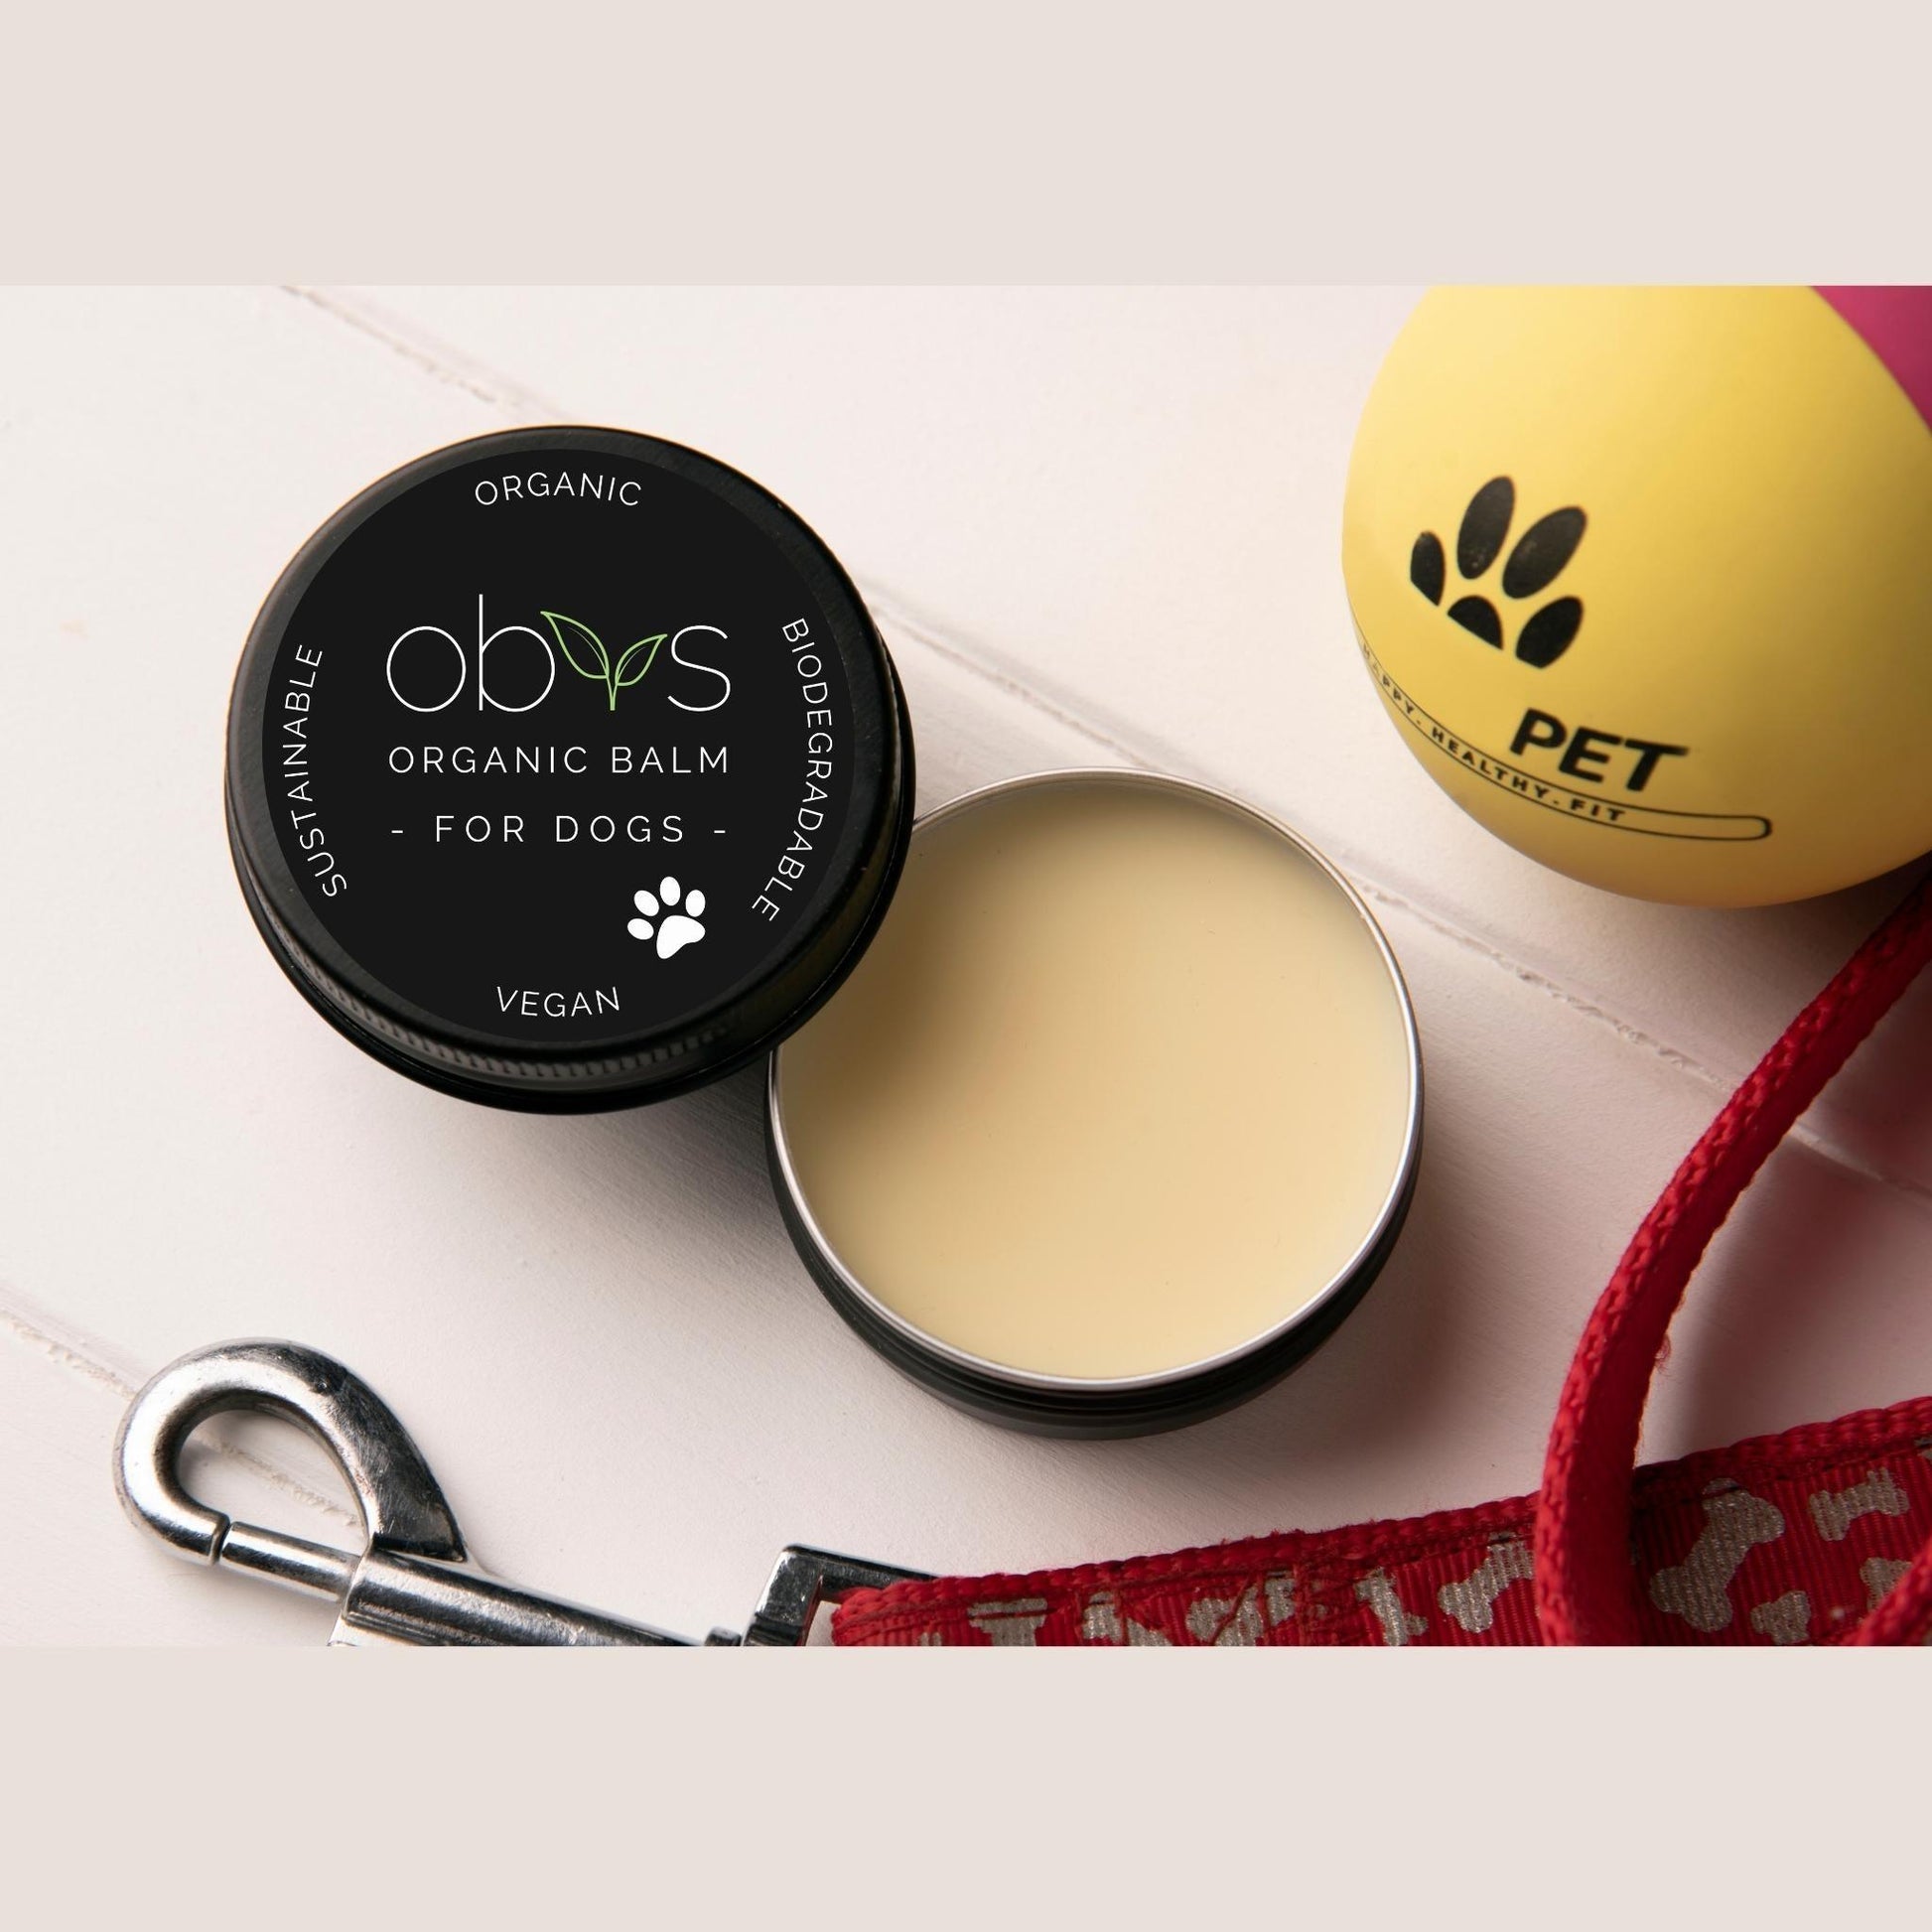 The Organic Balm For Dogs - Obvs Skincare - acne - eczema - skincare - organic